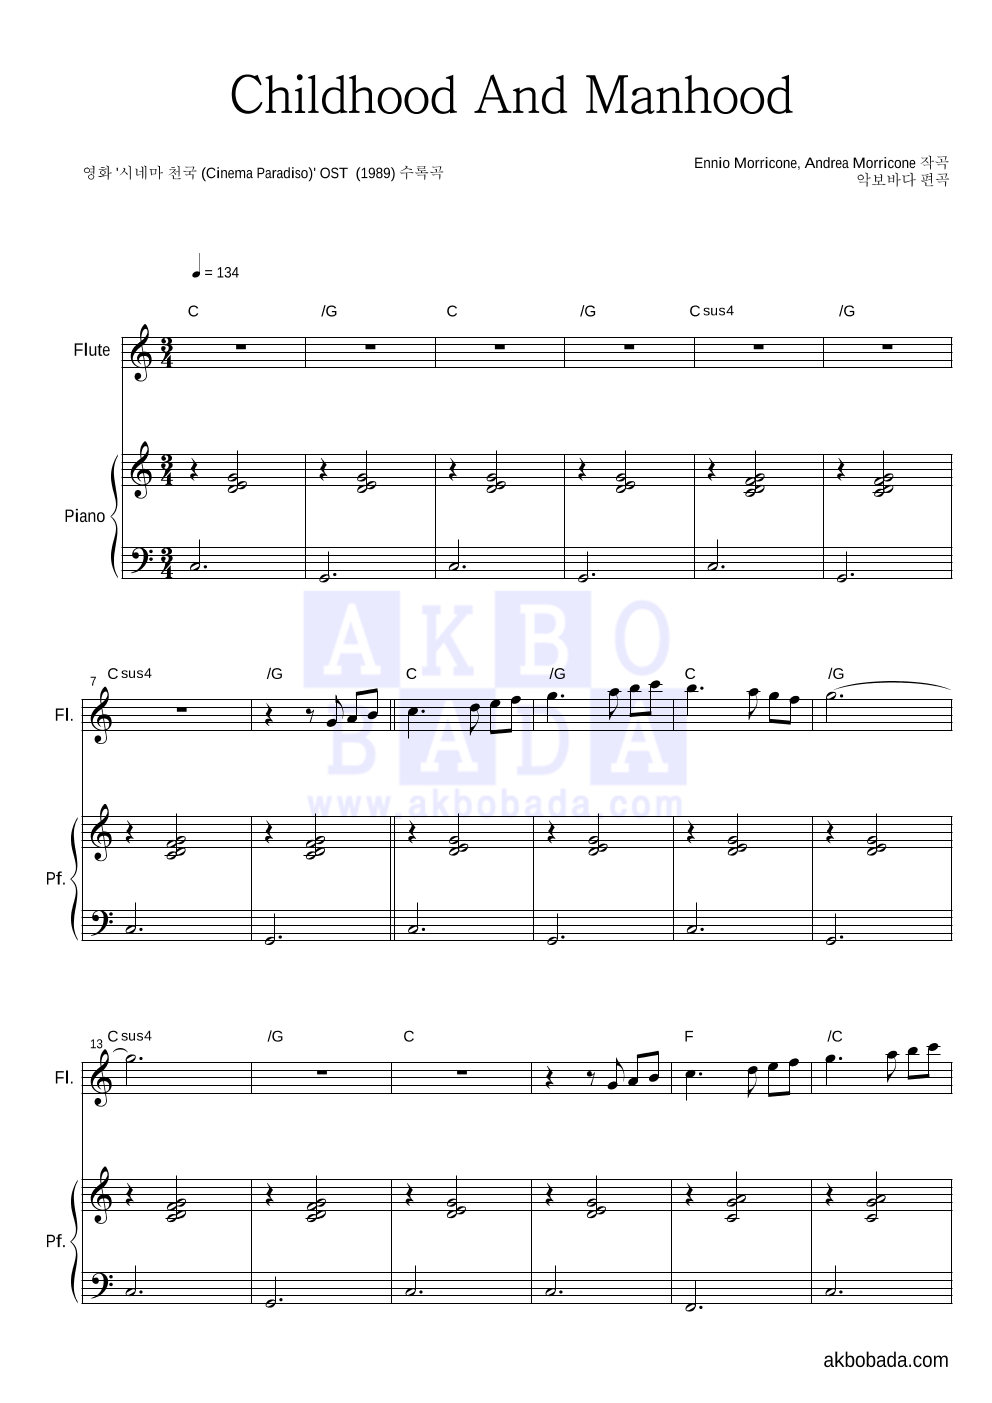 Ennio Morricone - Childhood And Manhood 플룻&피아노 악보 